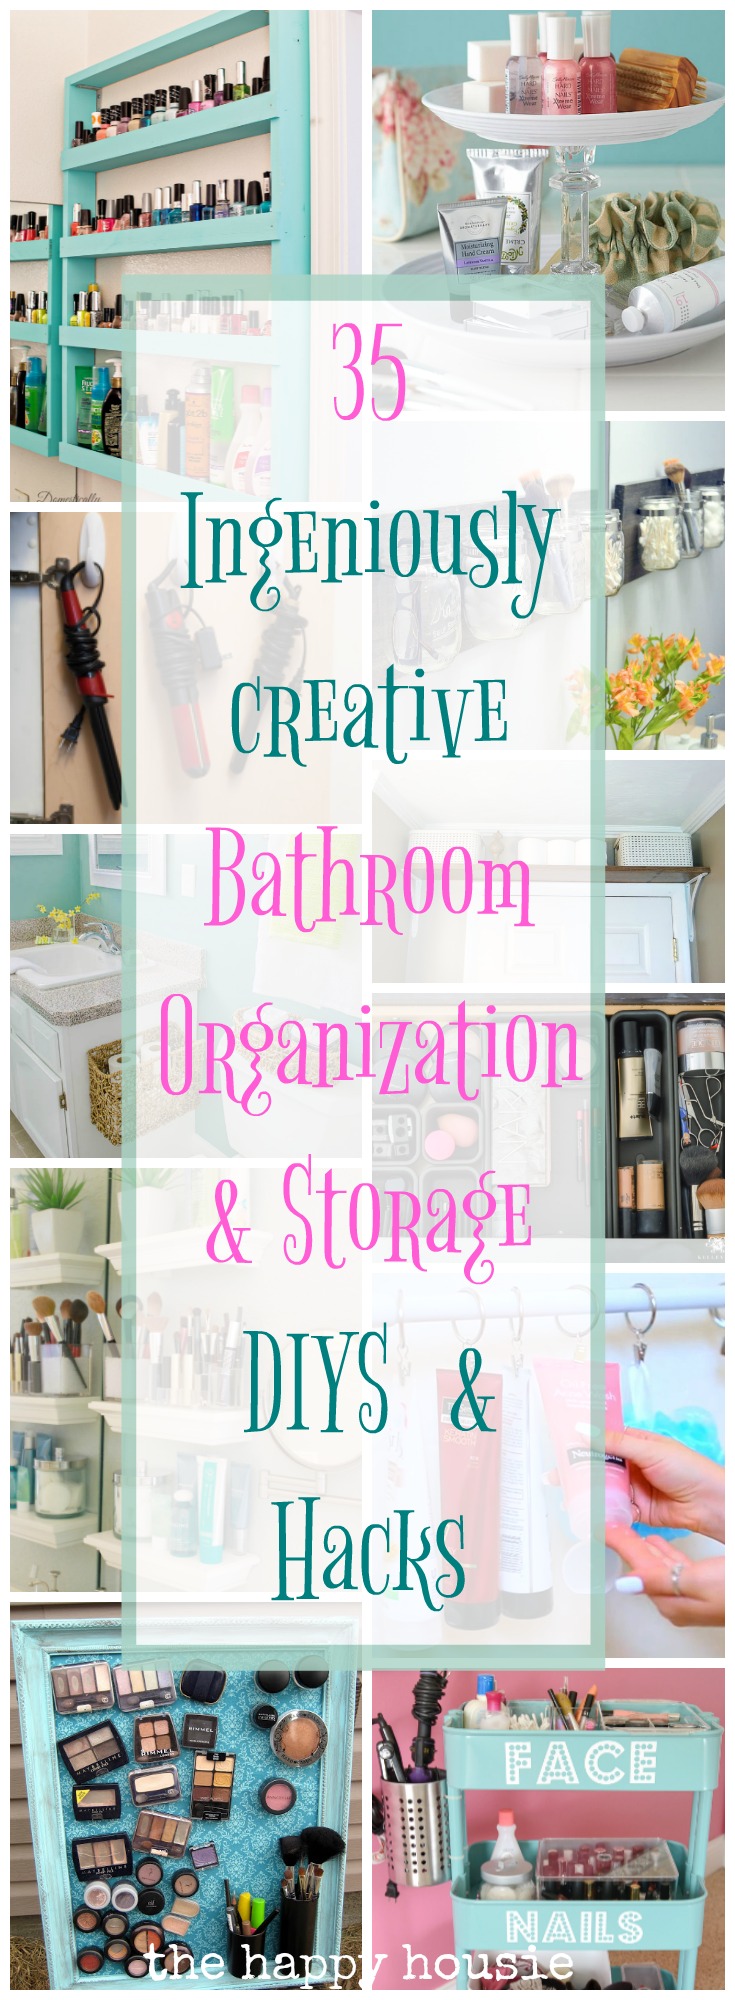 35 ingenious creative bathroom organization and storage hacks poster.